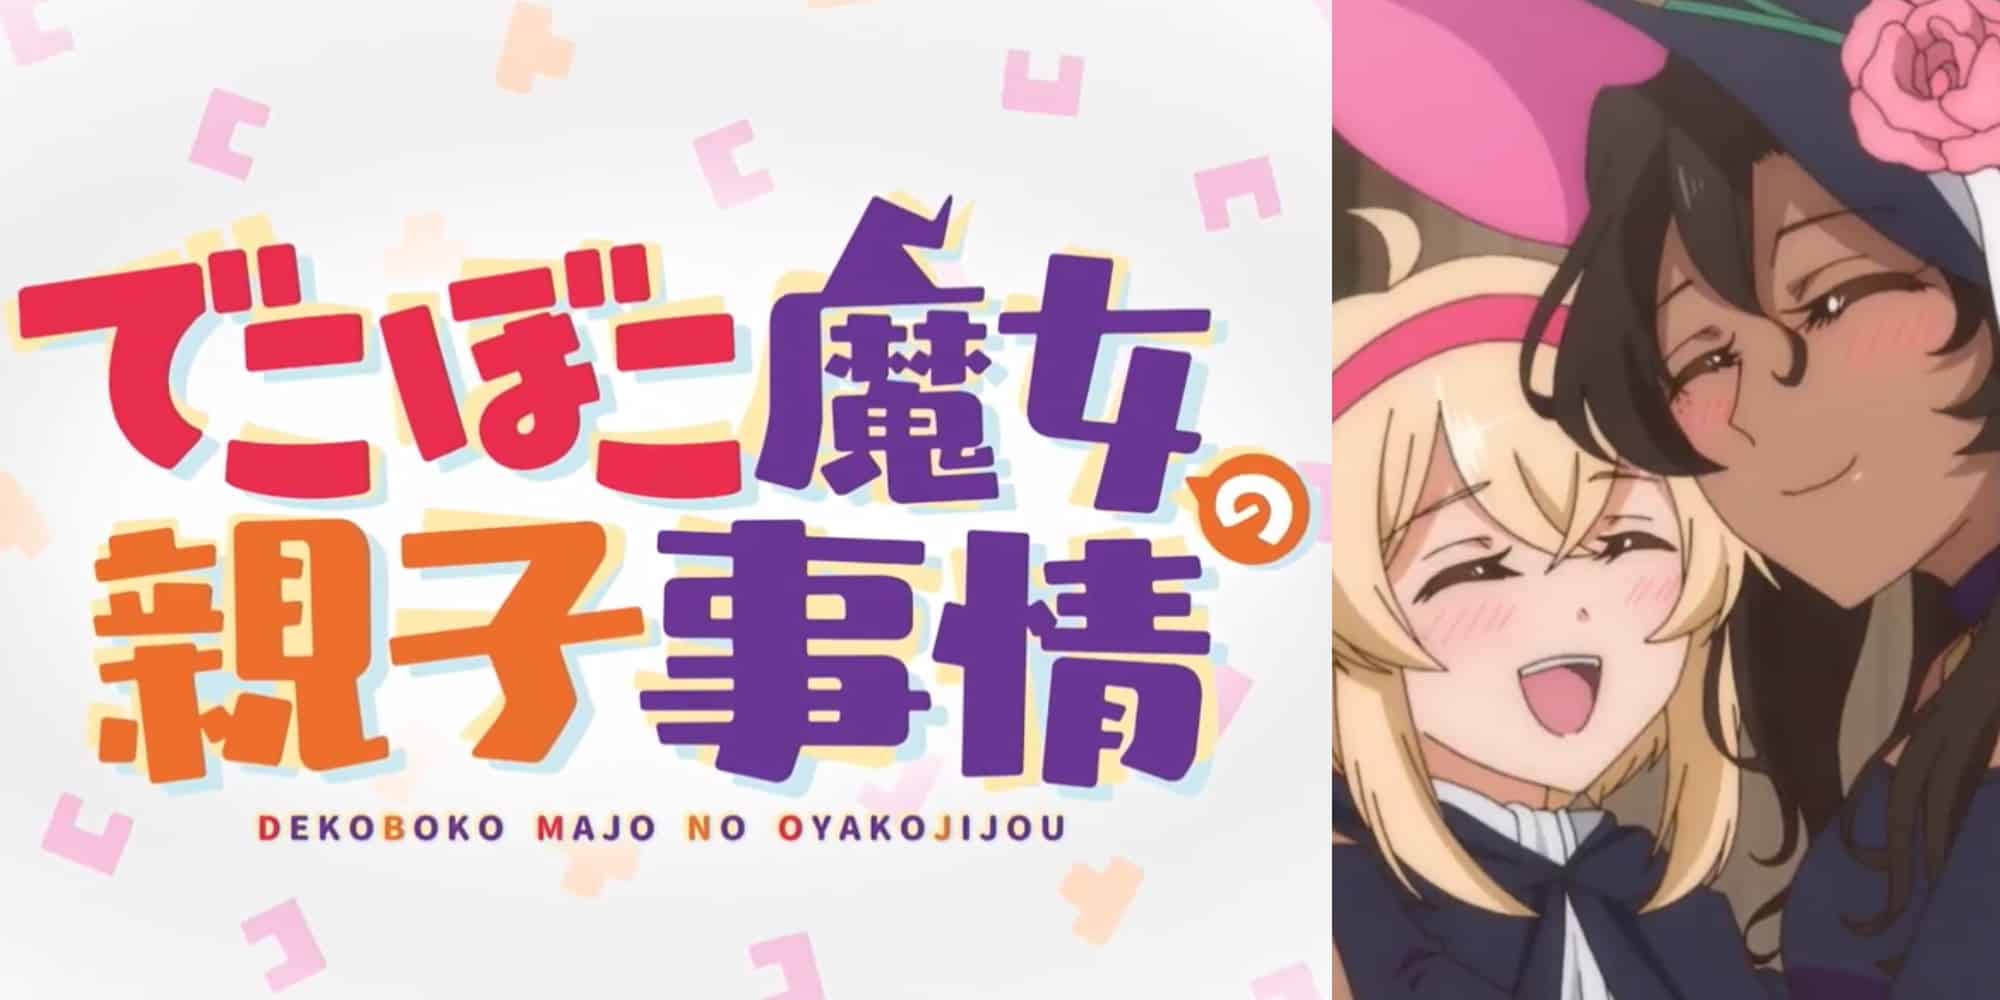 How To Watch Dekoboko Majo no Oyako Jijou Episodes?